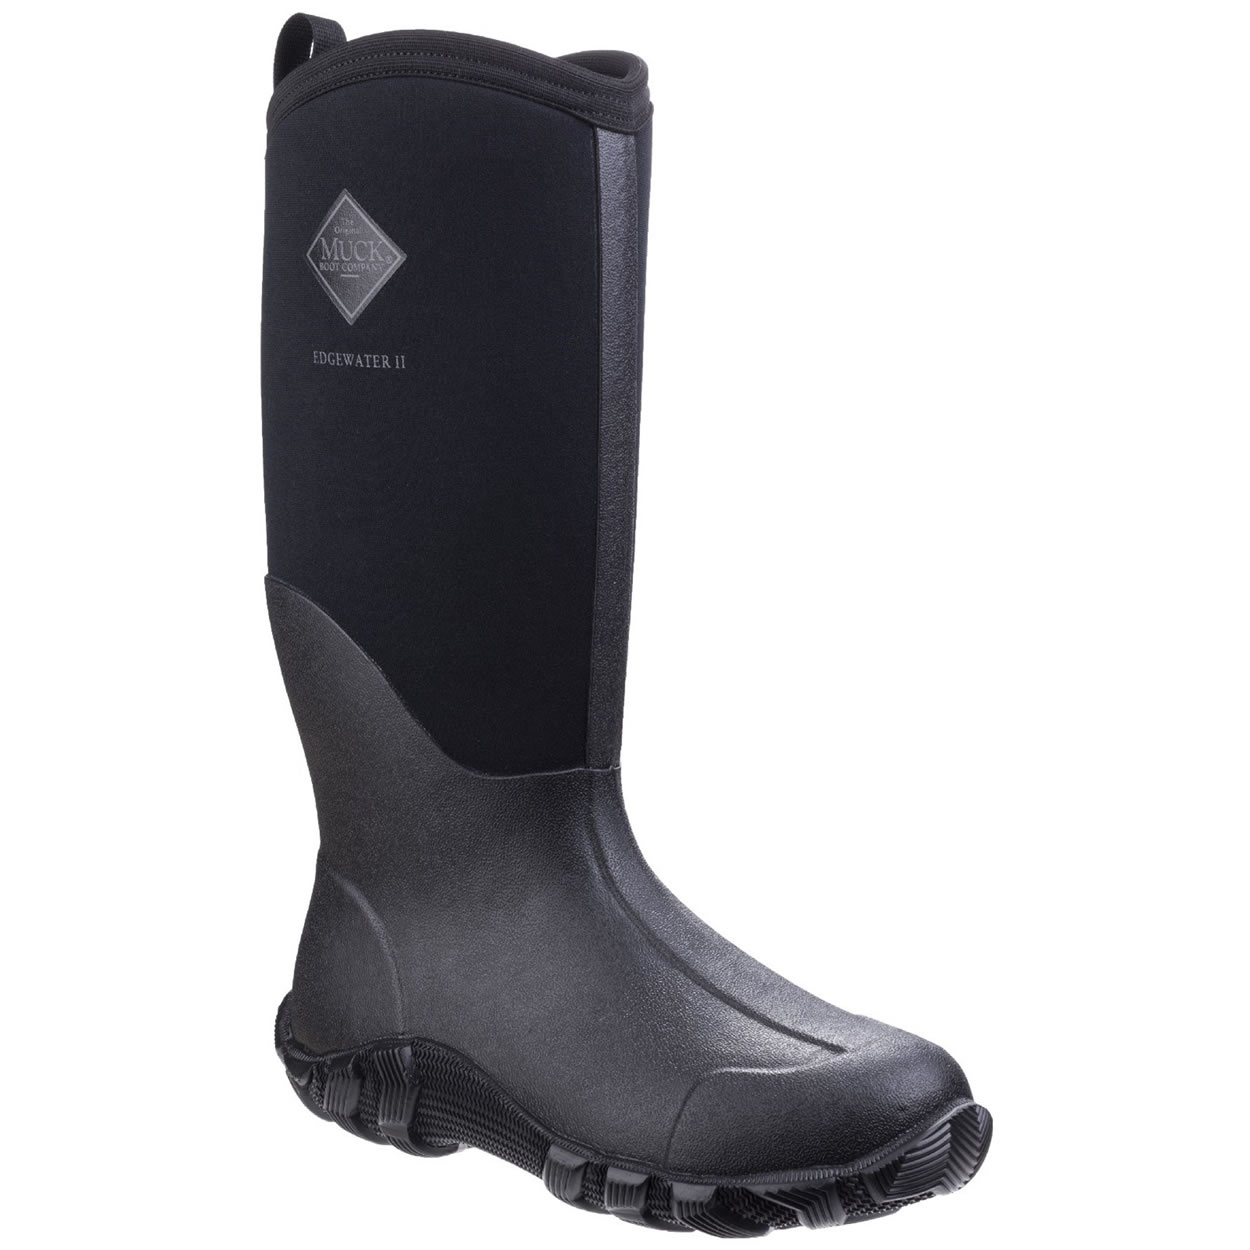 Muck Boot - Edgewater II - Black - £105 | Garden4Less UK Shop